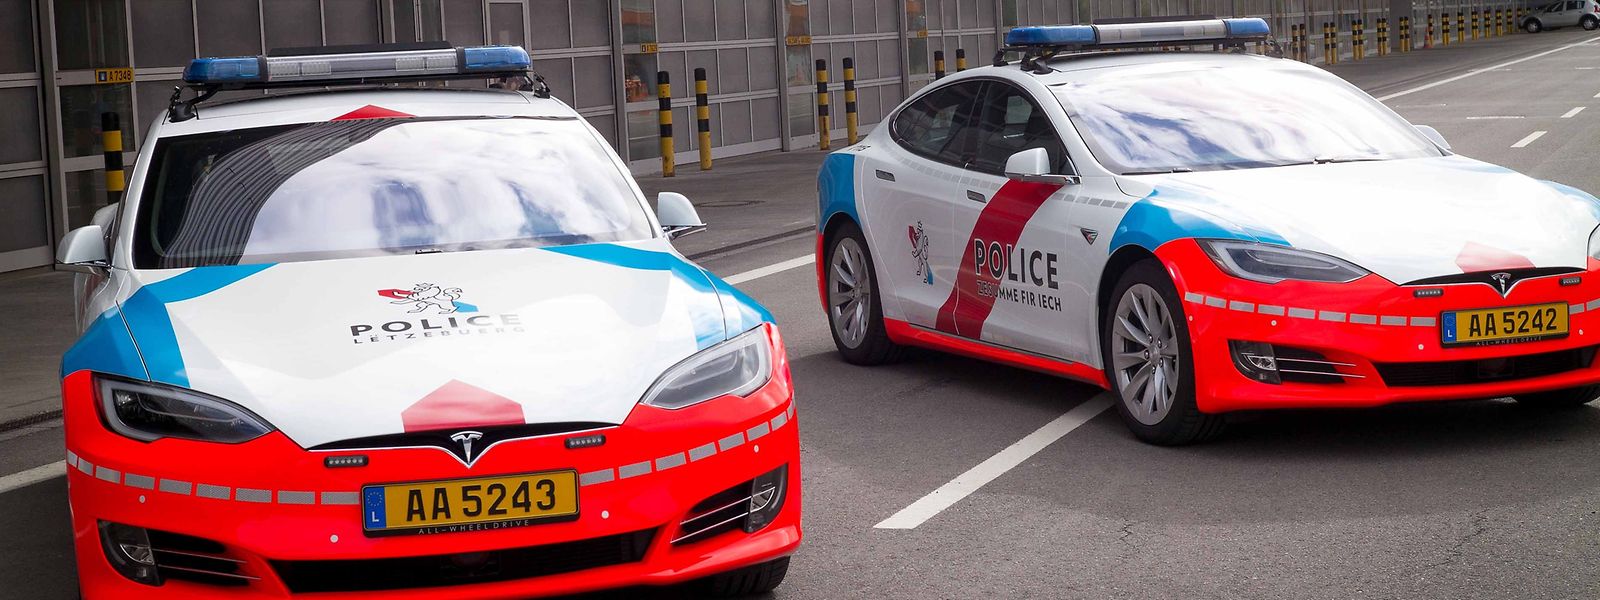 Im April 2018 nahm die Verkehrspolizei zwei Tesla-Fahrzeuge in Betrieb. 